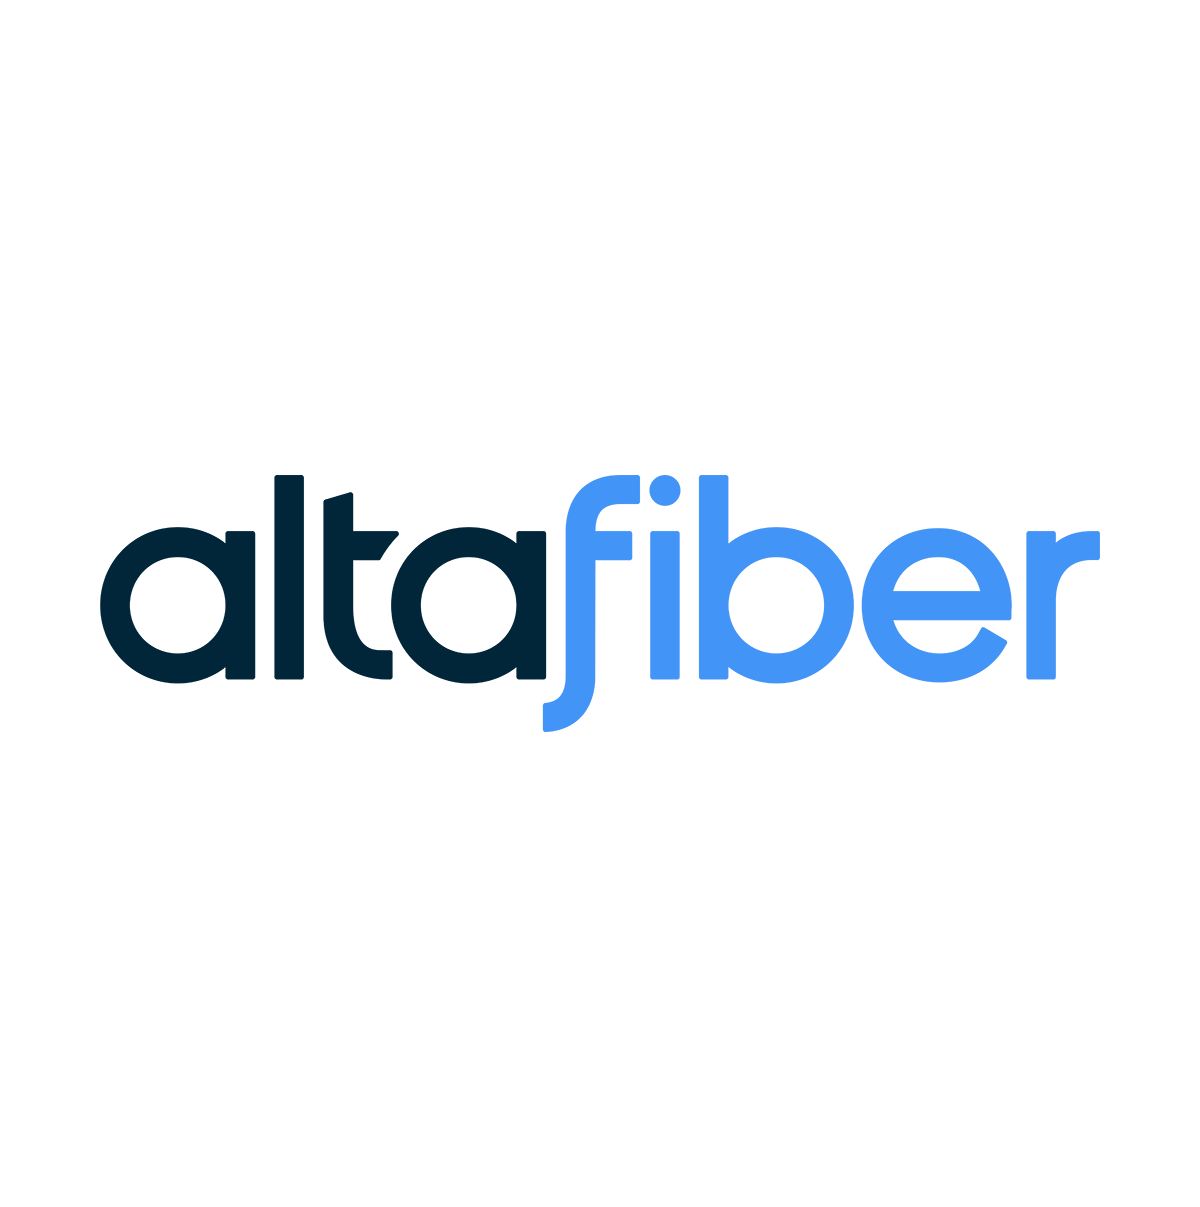 altafiber logo a schey sales recruiting partner